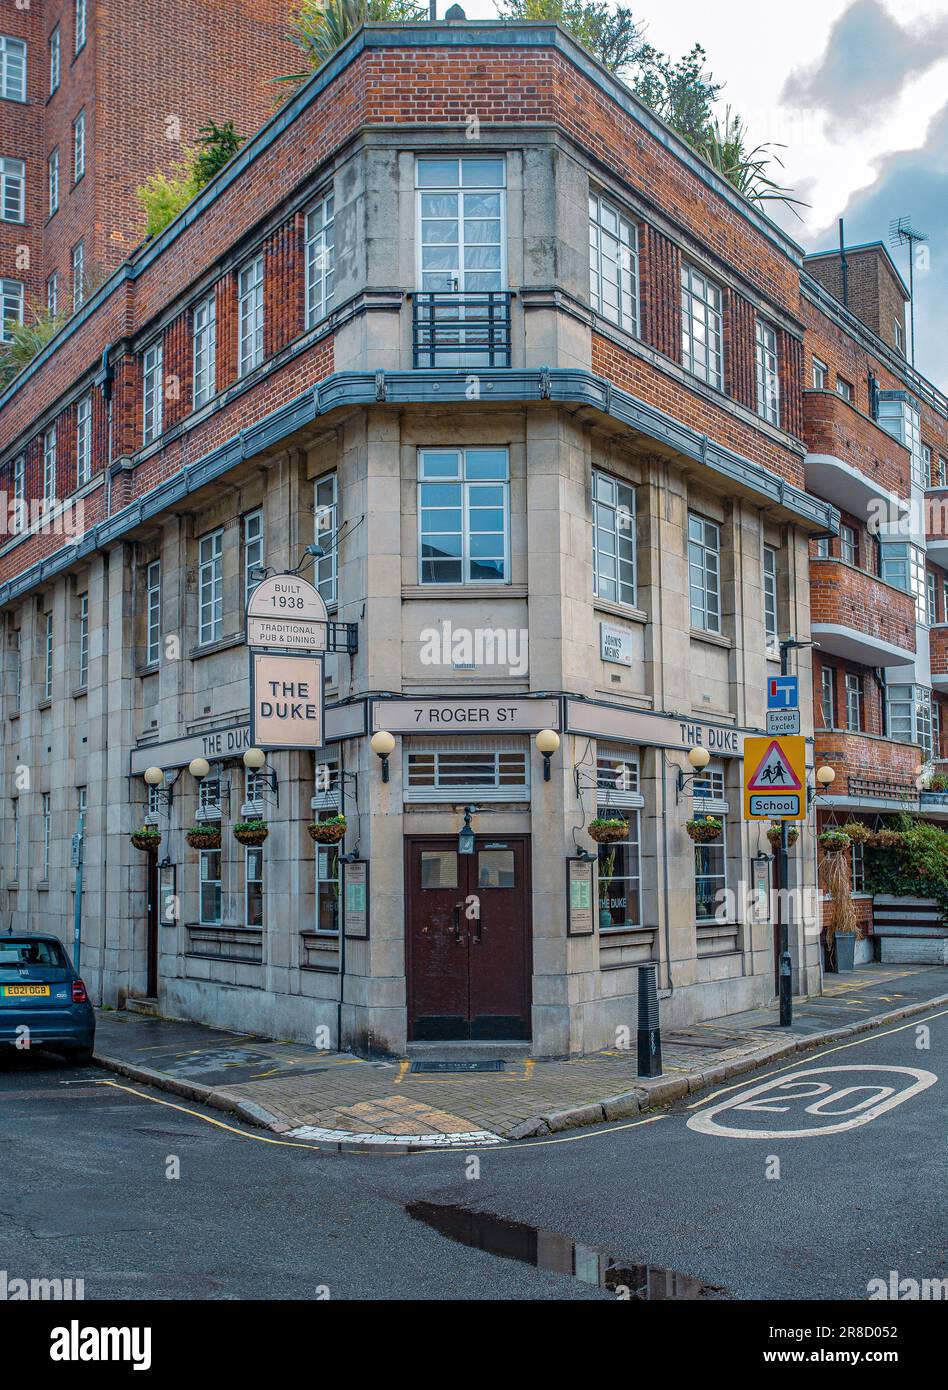 Exterior the Duke pub in Roger St, London, Uk Stock Photo